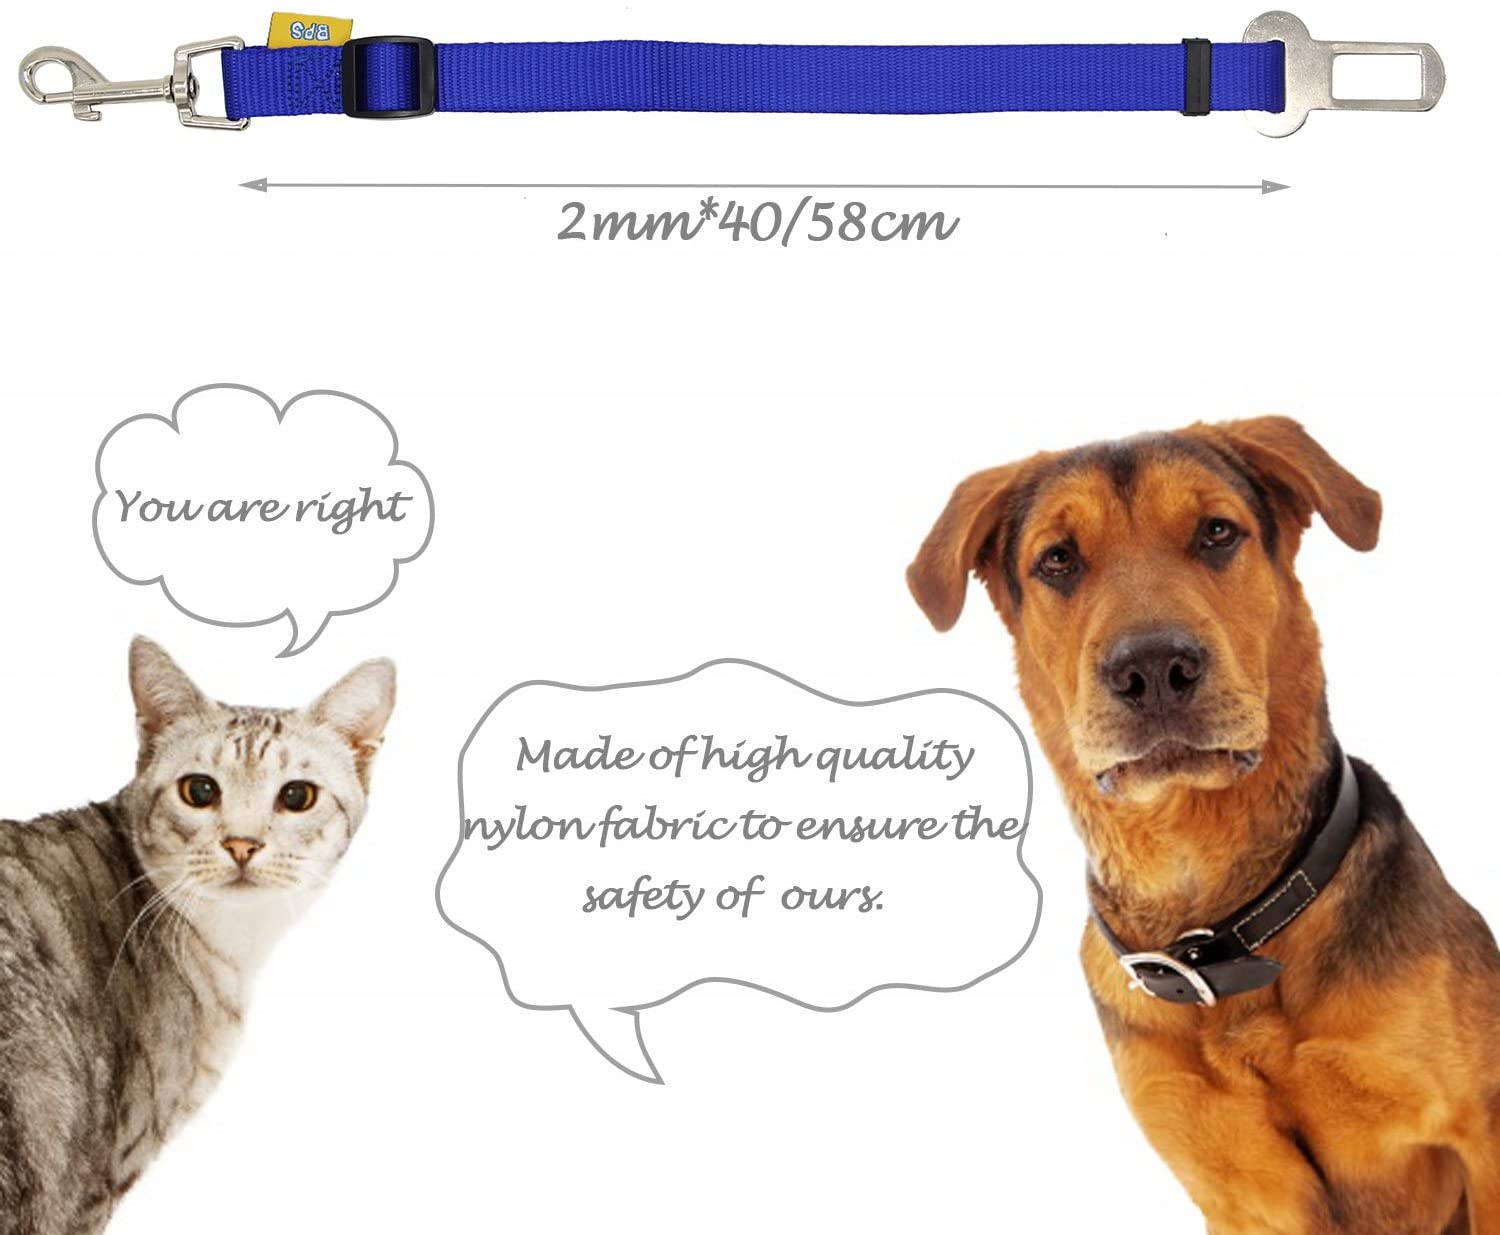  BPS(R 2X Cinturón de Seguridad de Coche,Ajustable para Perro,Color:Azul Oscuro,Azul Claro,Verde y Rojo,Safety Belt para Cachorro Gato Gata Mascotas Animales,Tamaño:(2.0 x 40/58cm). BPS-2675 * 2 